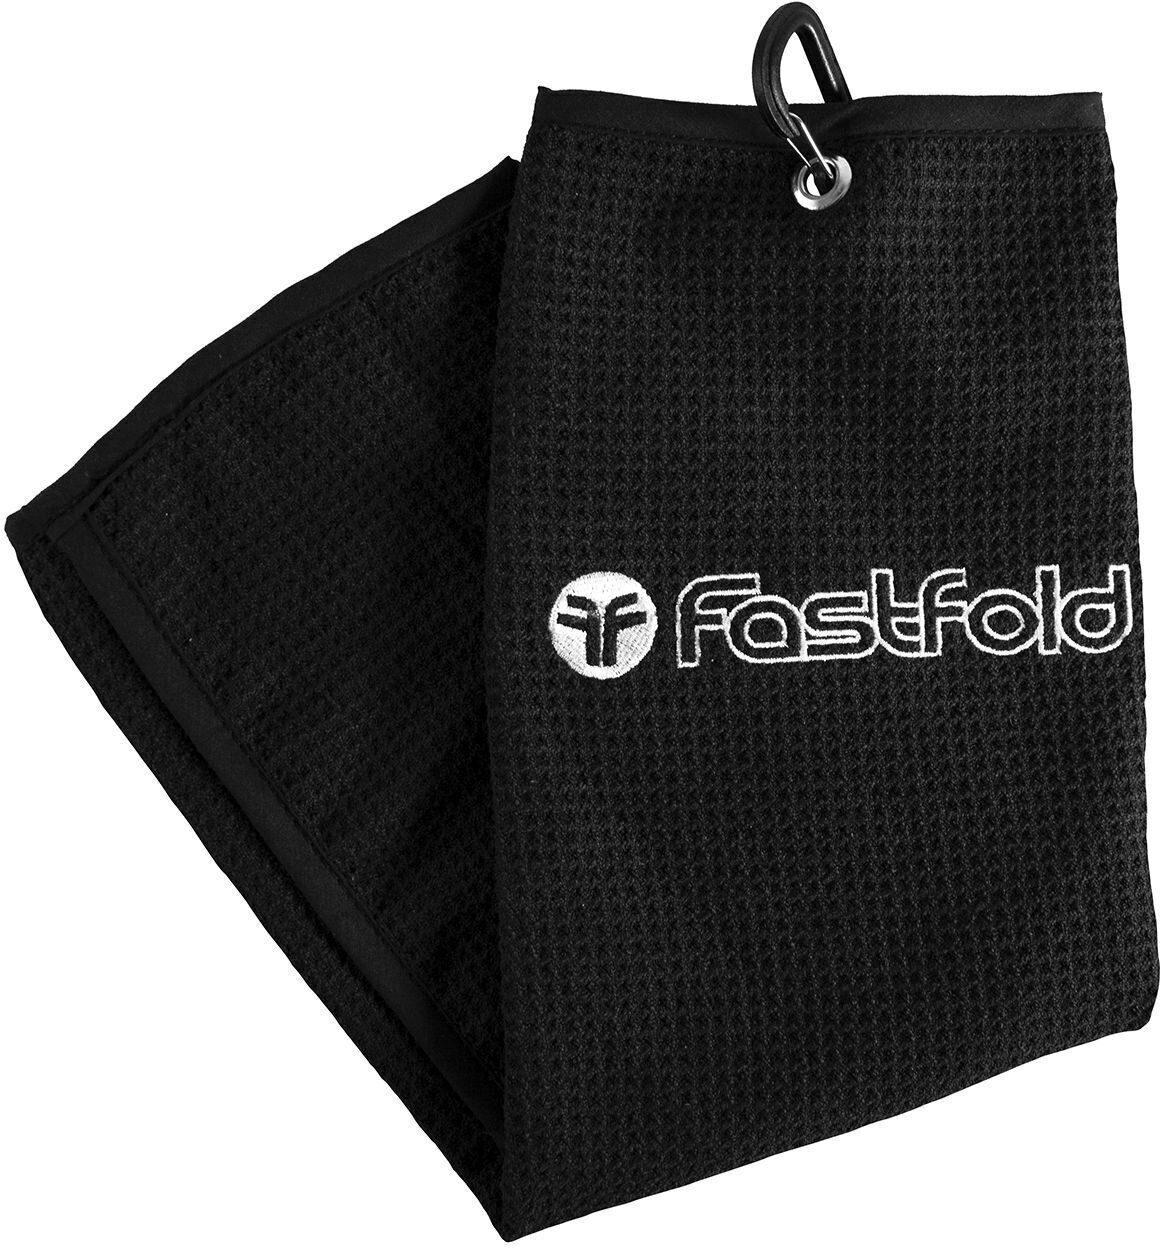 Towel Fastfold Towel Black